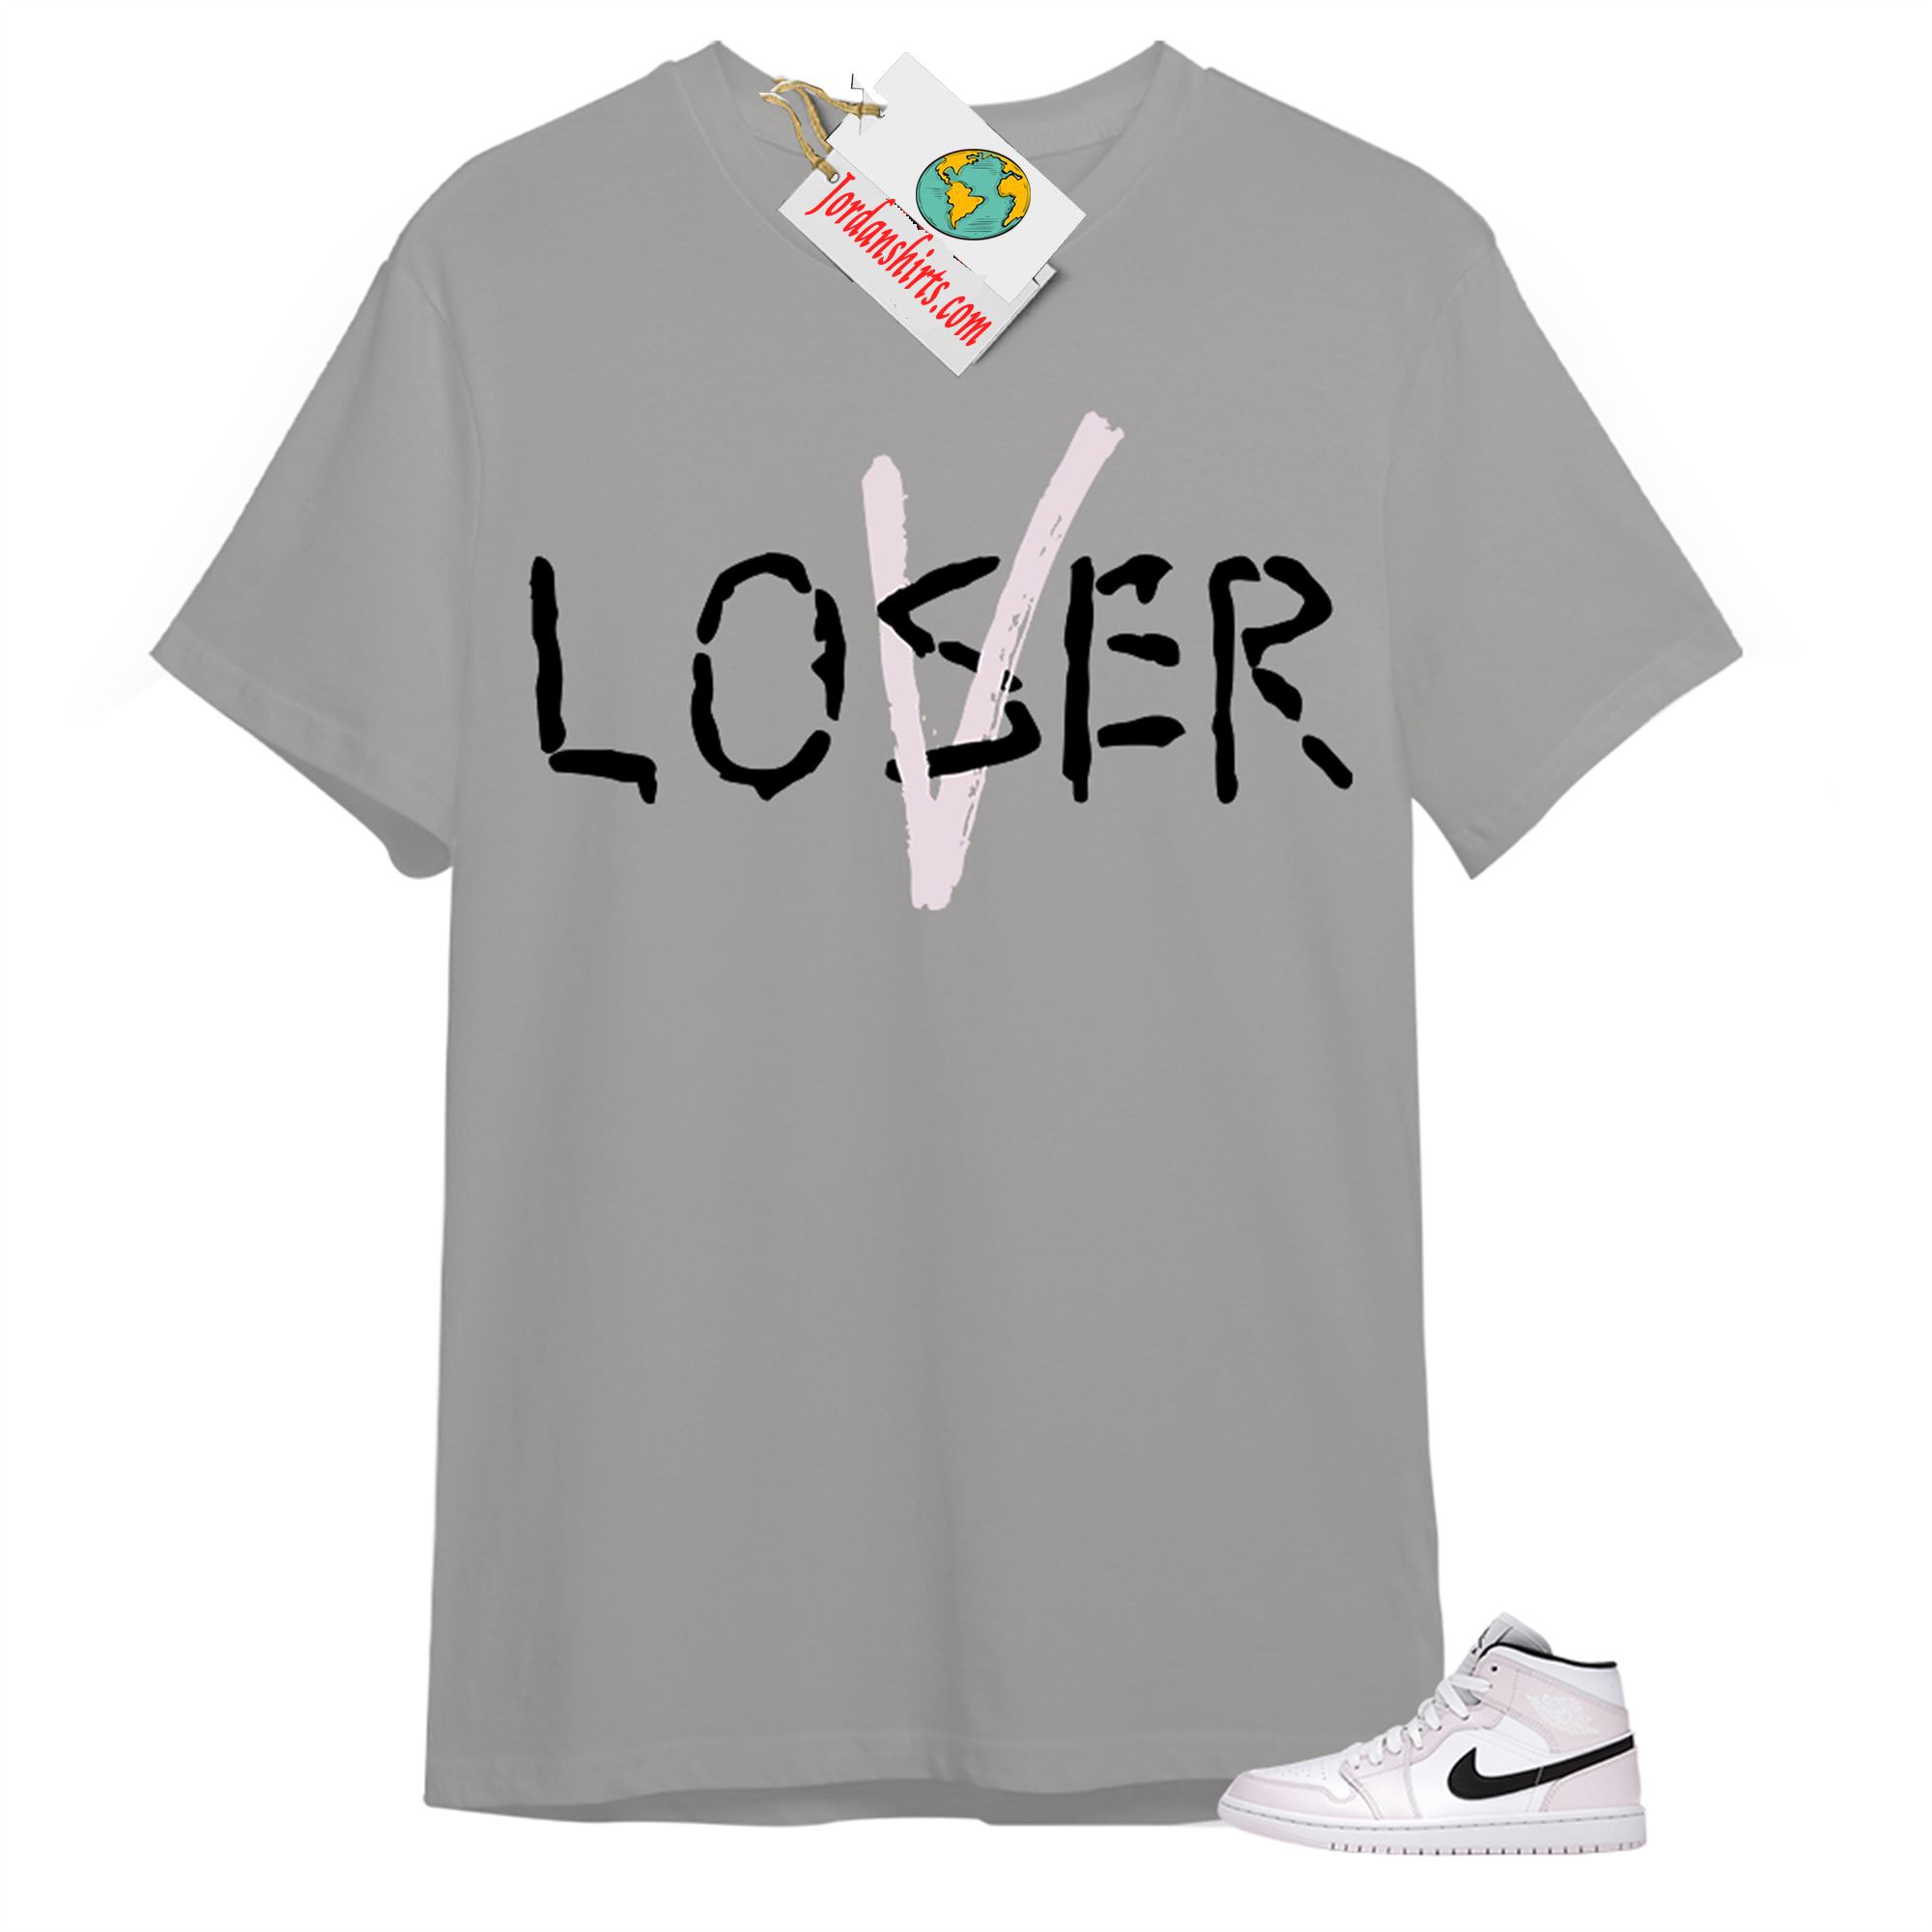 Jordan 1 Shirt, Love A Loser Grey T-shirt Air Jordan 1 Barely Rose 1s Full Size Up To 5xl